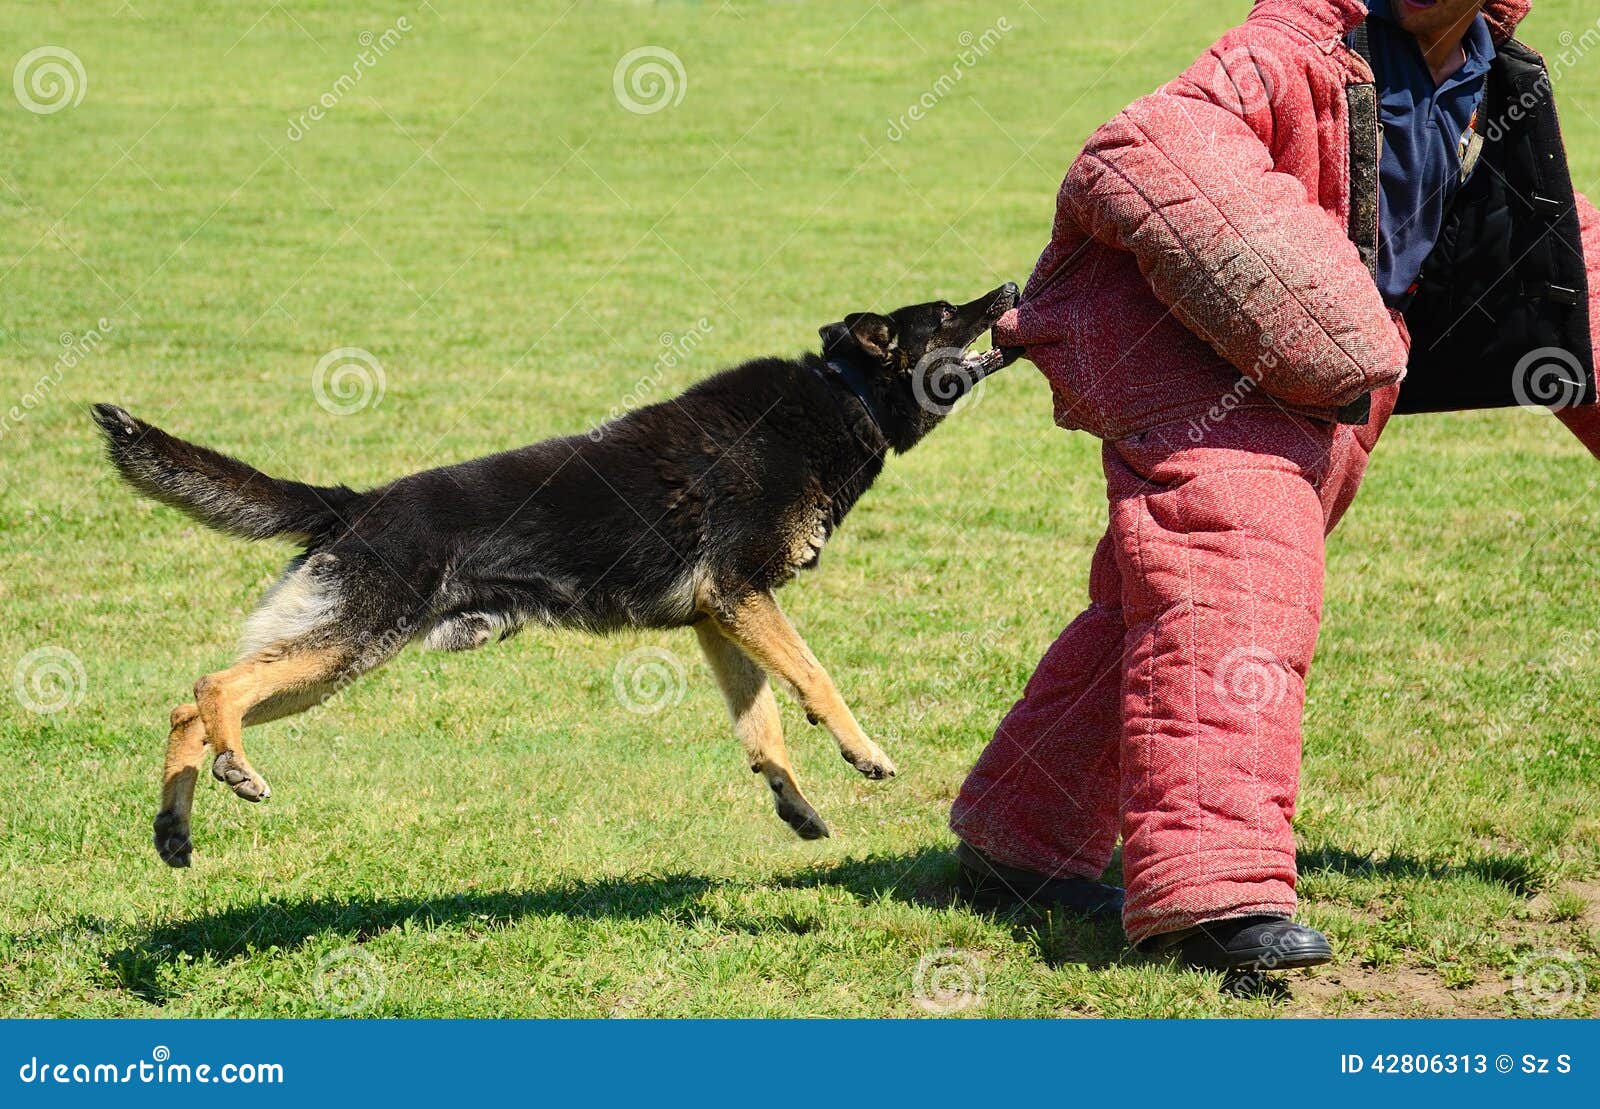 K9 Dog In Training, Attack Demonstration Stock Photo ...